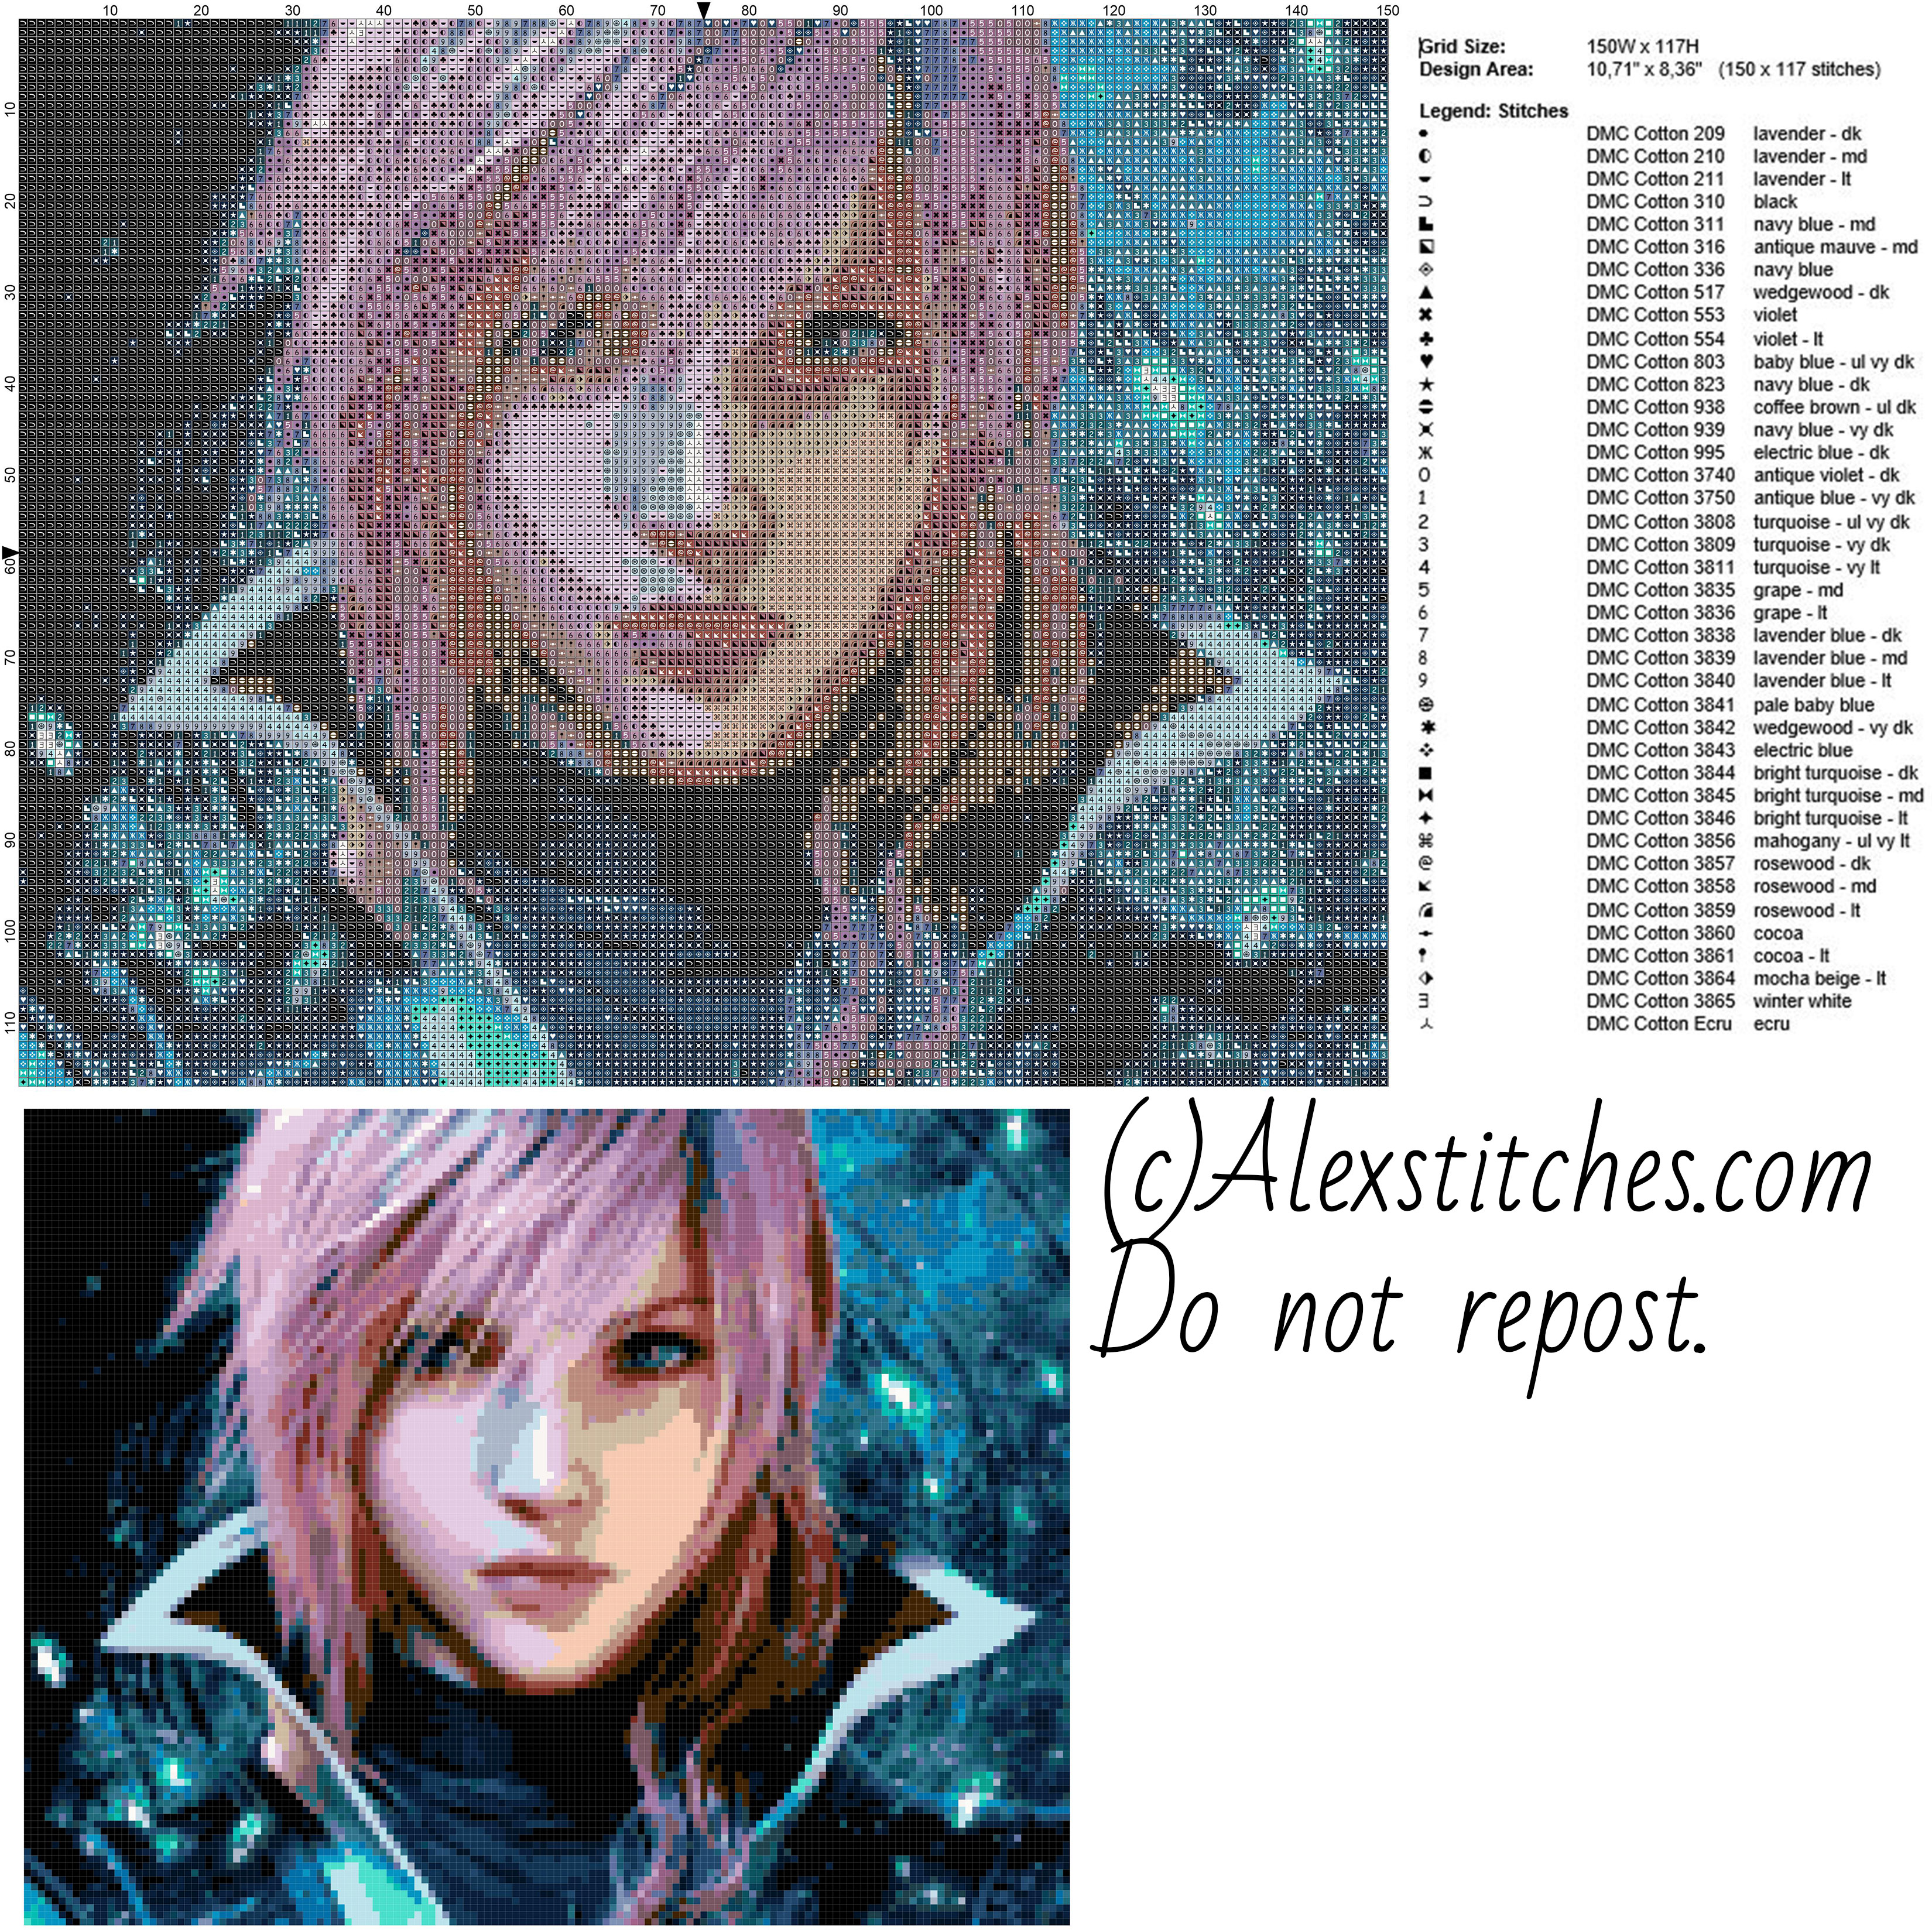 Lightning Final Fantasy XIII free videogames cross stitch pattern 150x117 50 colors